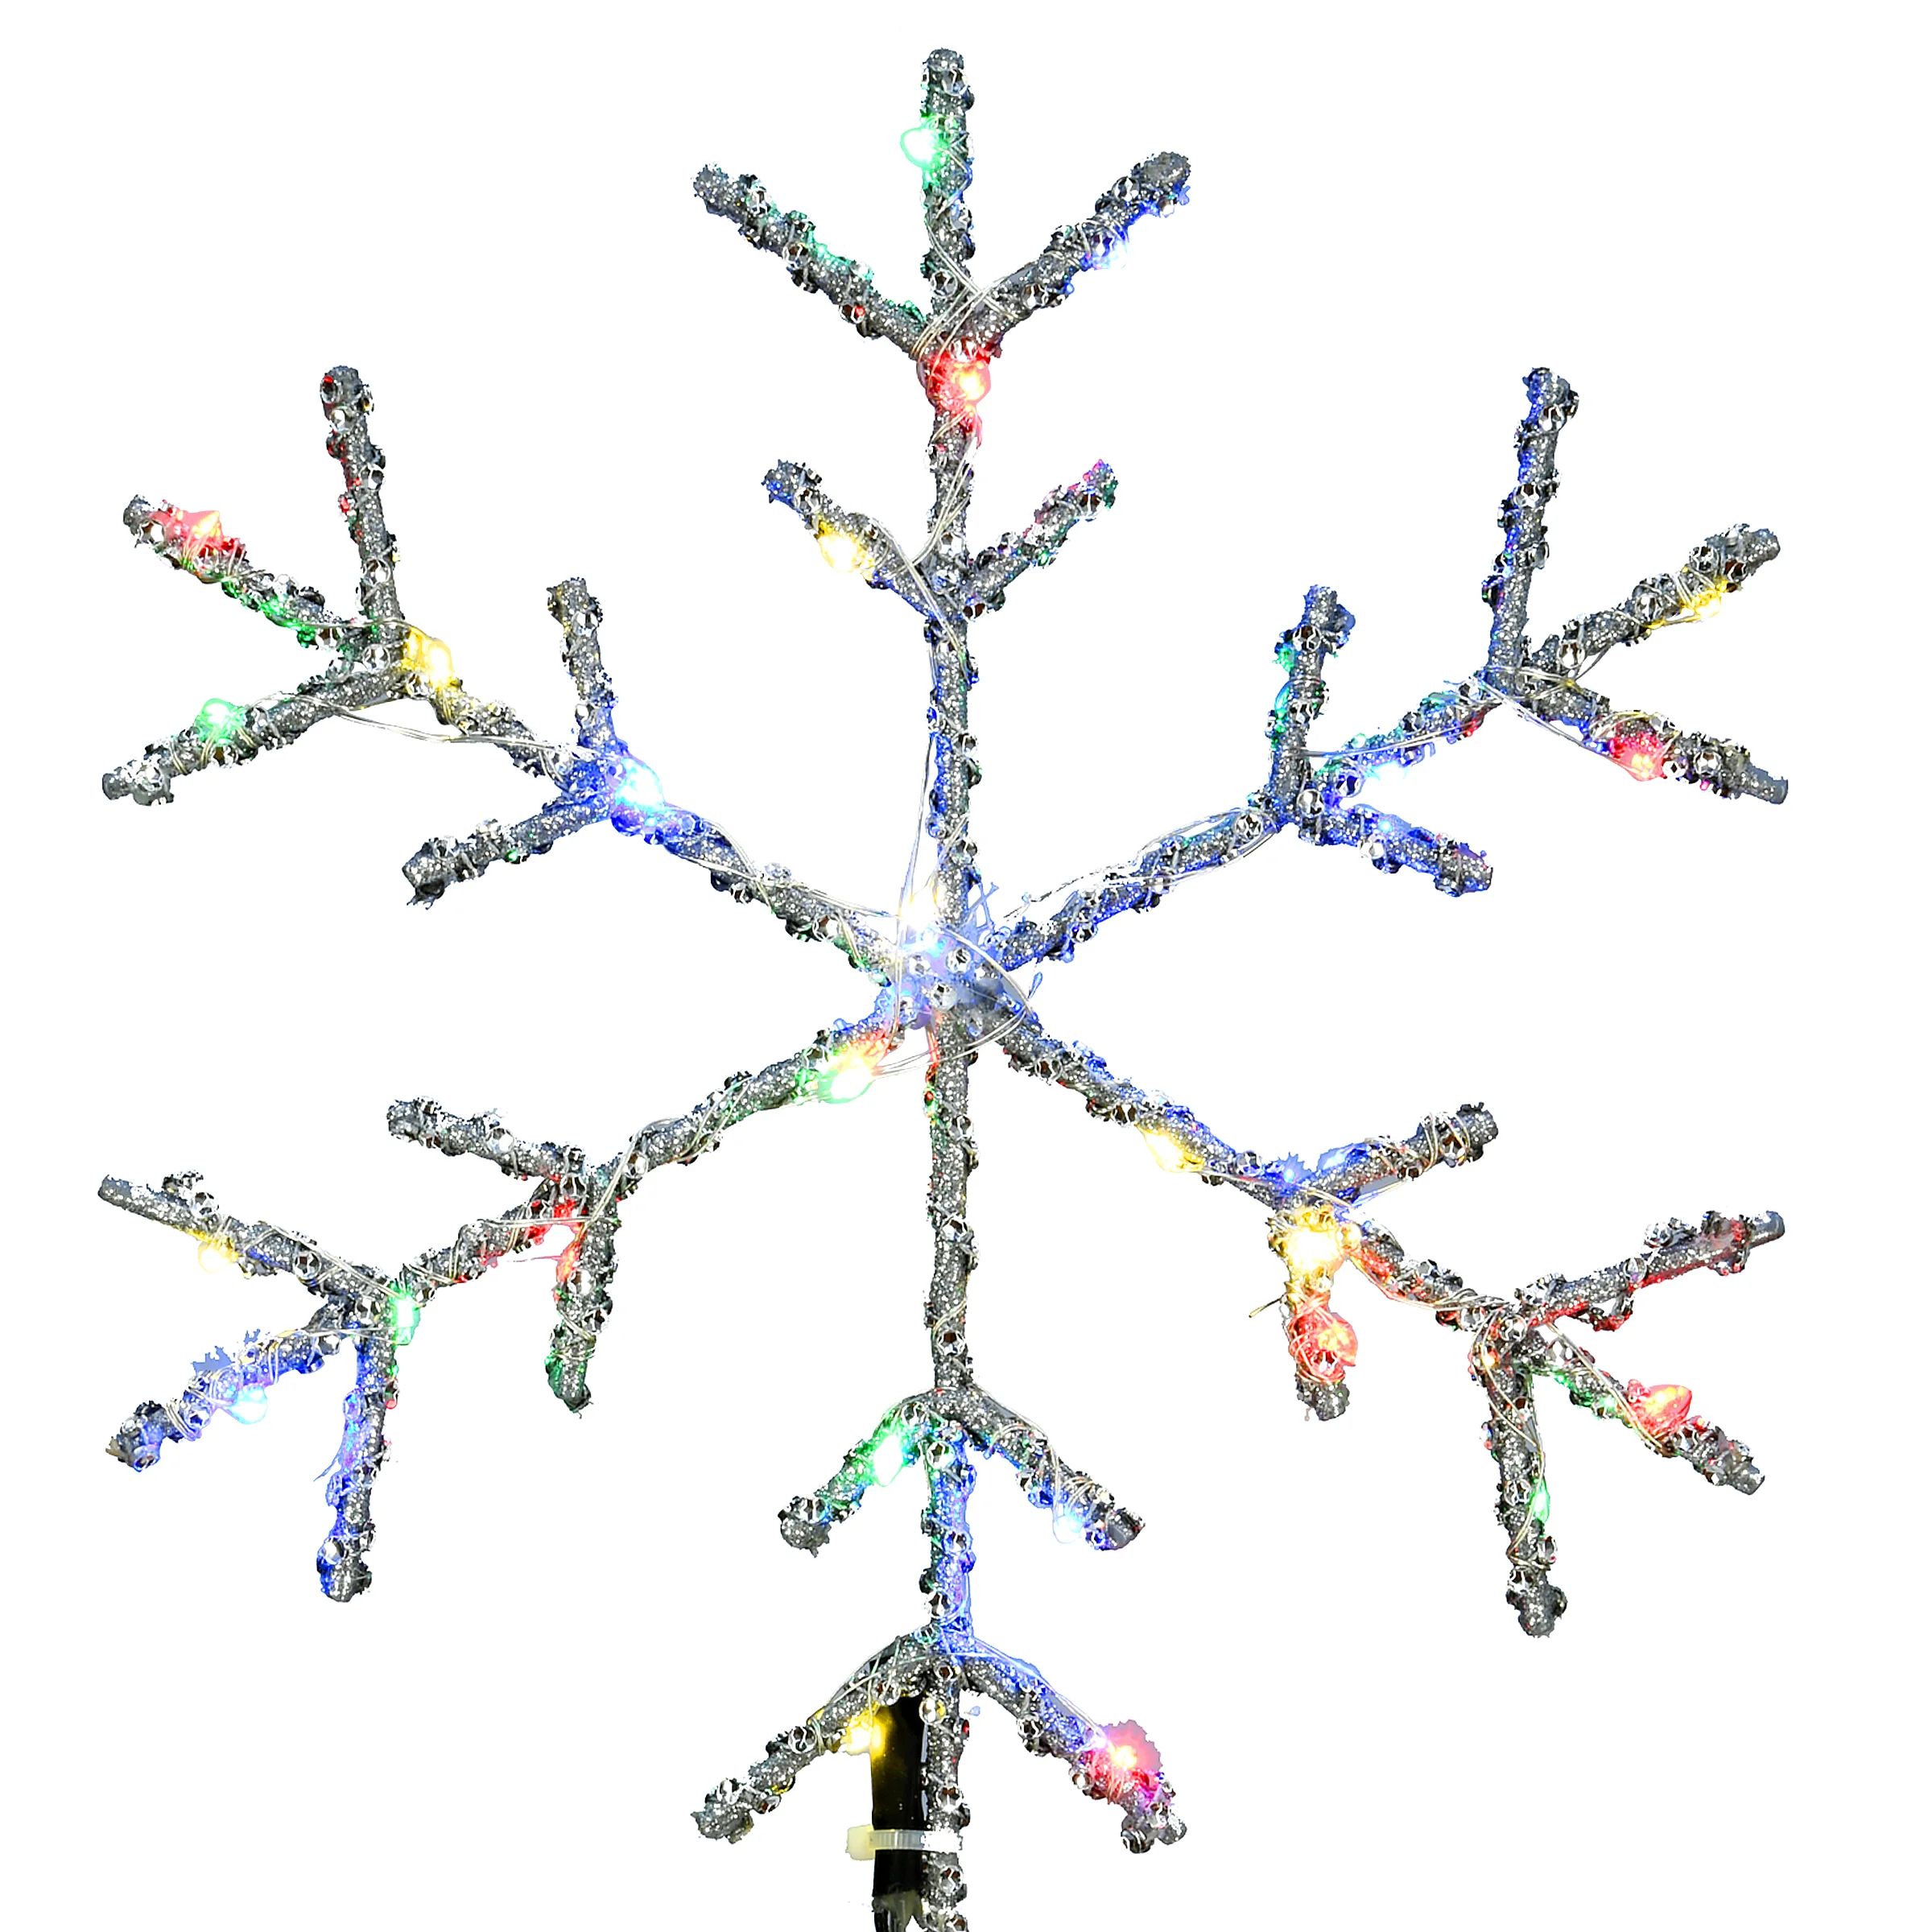 Snowflake Tree Topper | Wayfair North America